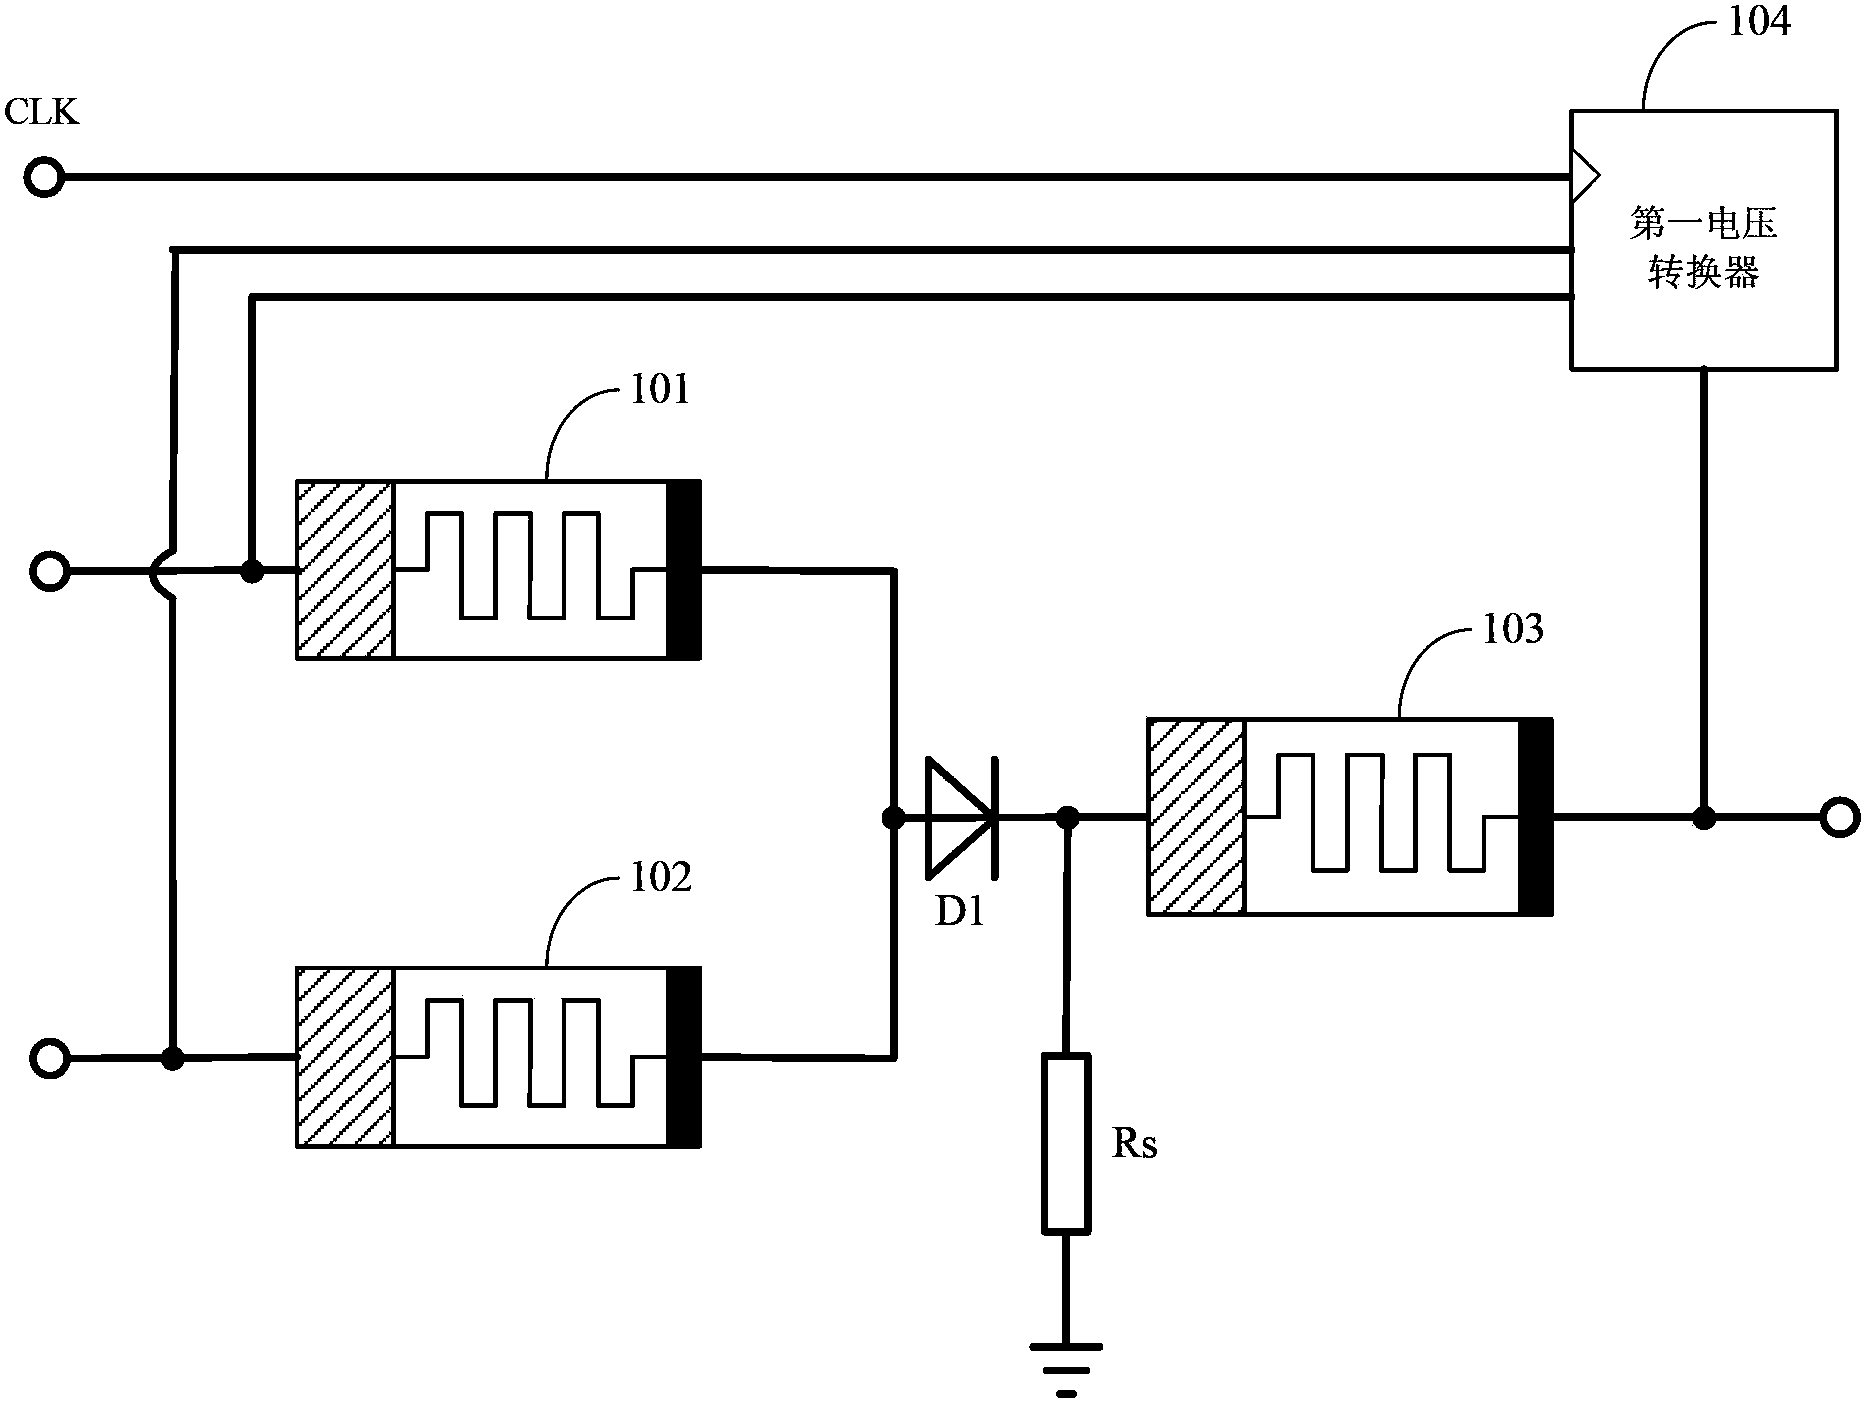 A memristor-based logic gate circuit